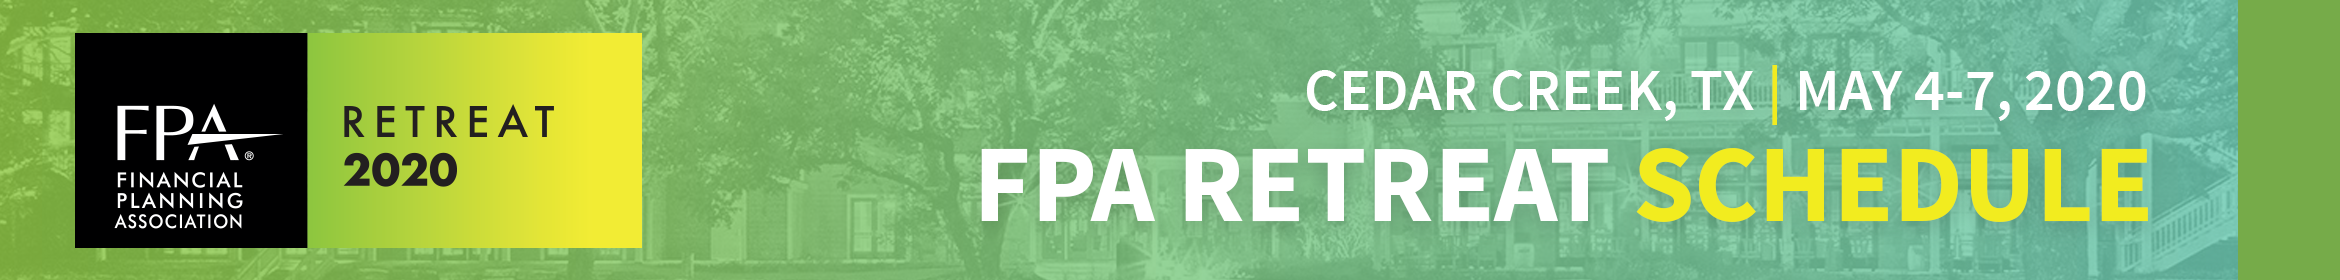 FPA Retreat 2020 Main banner